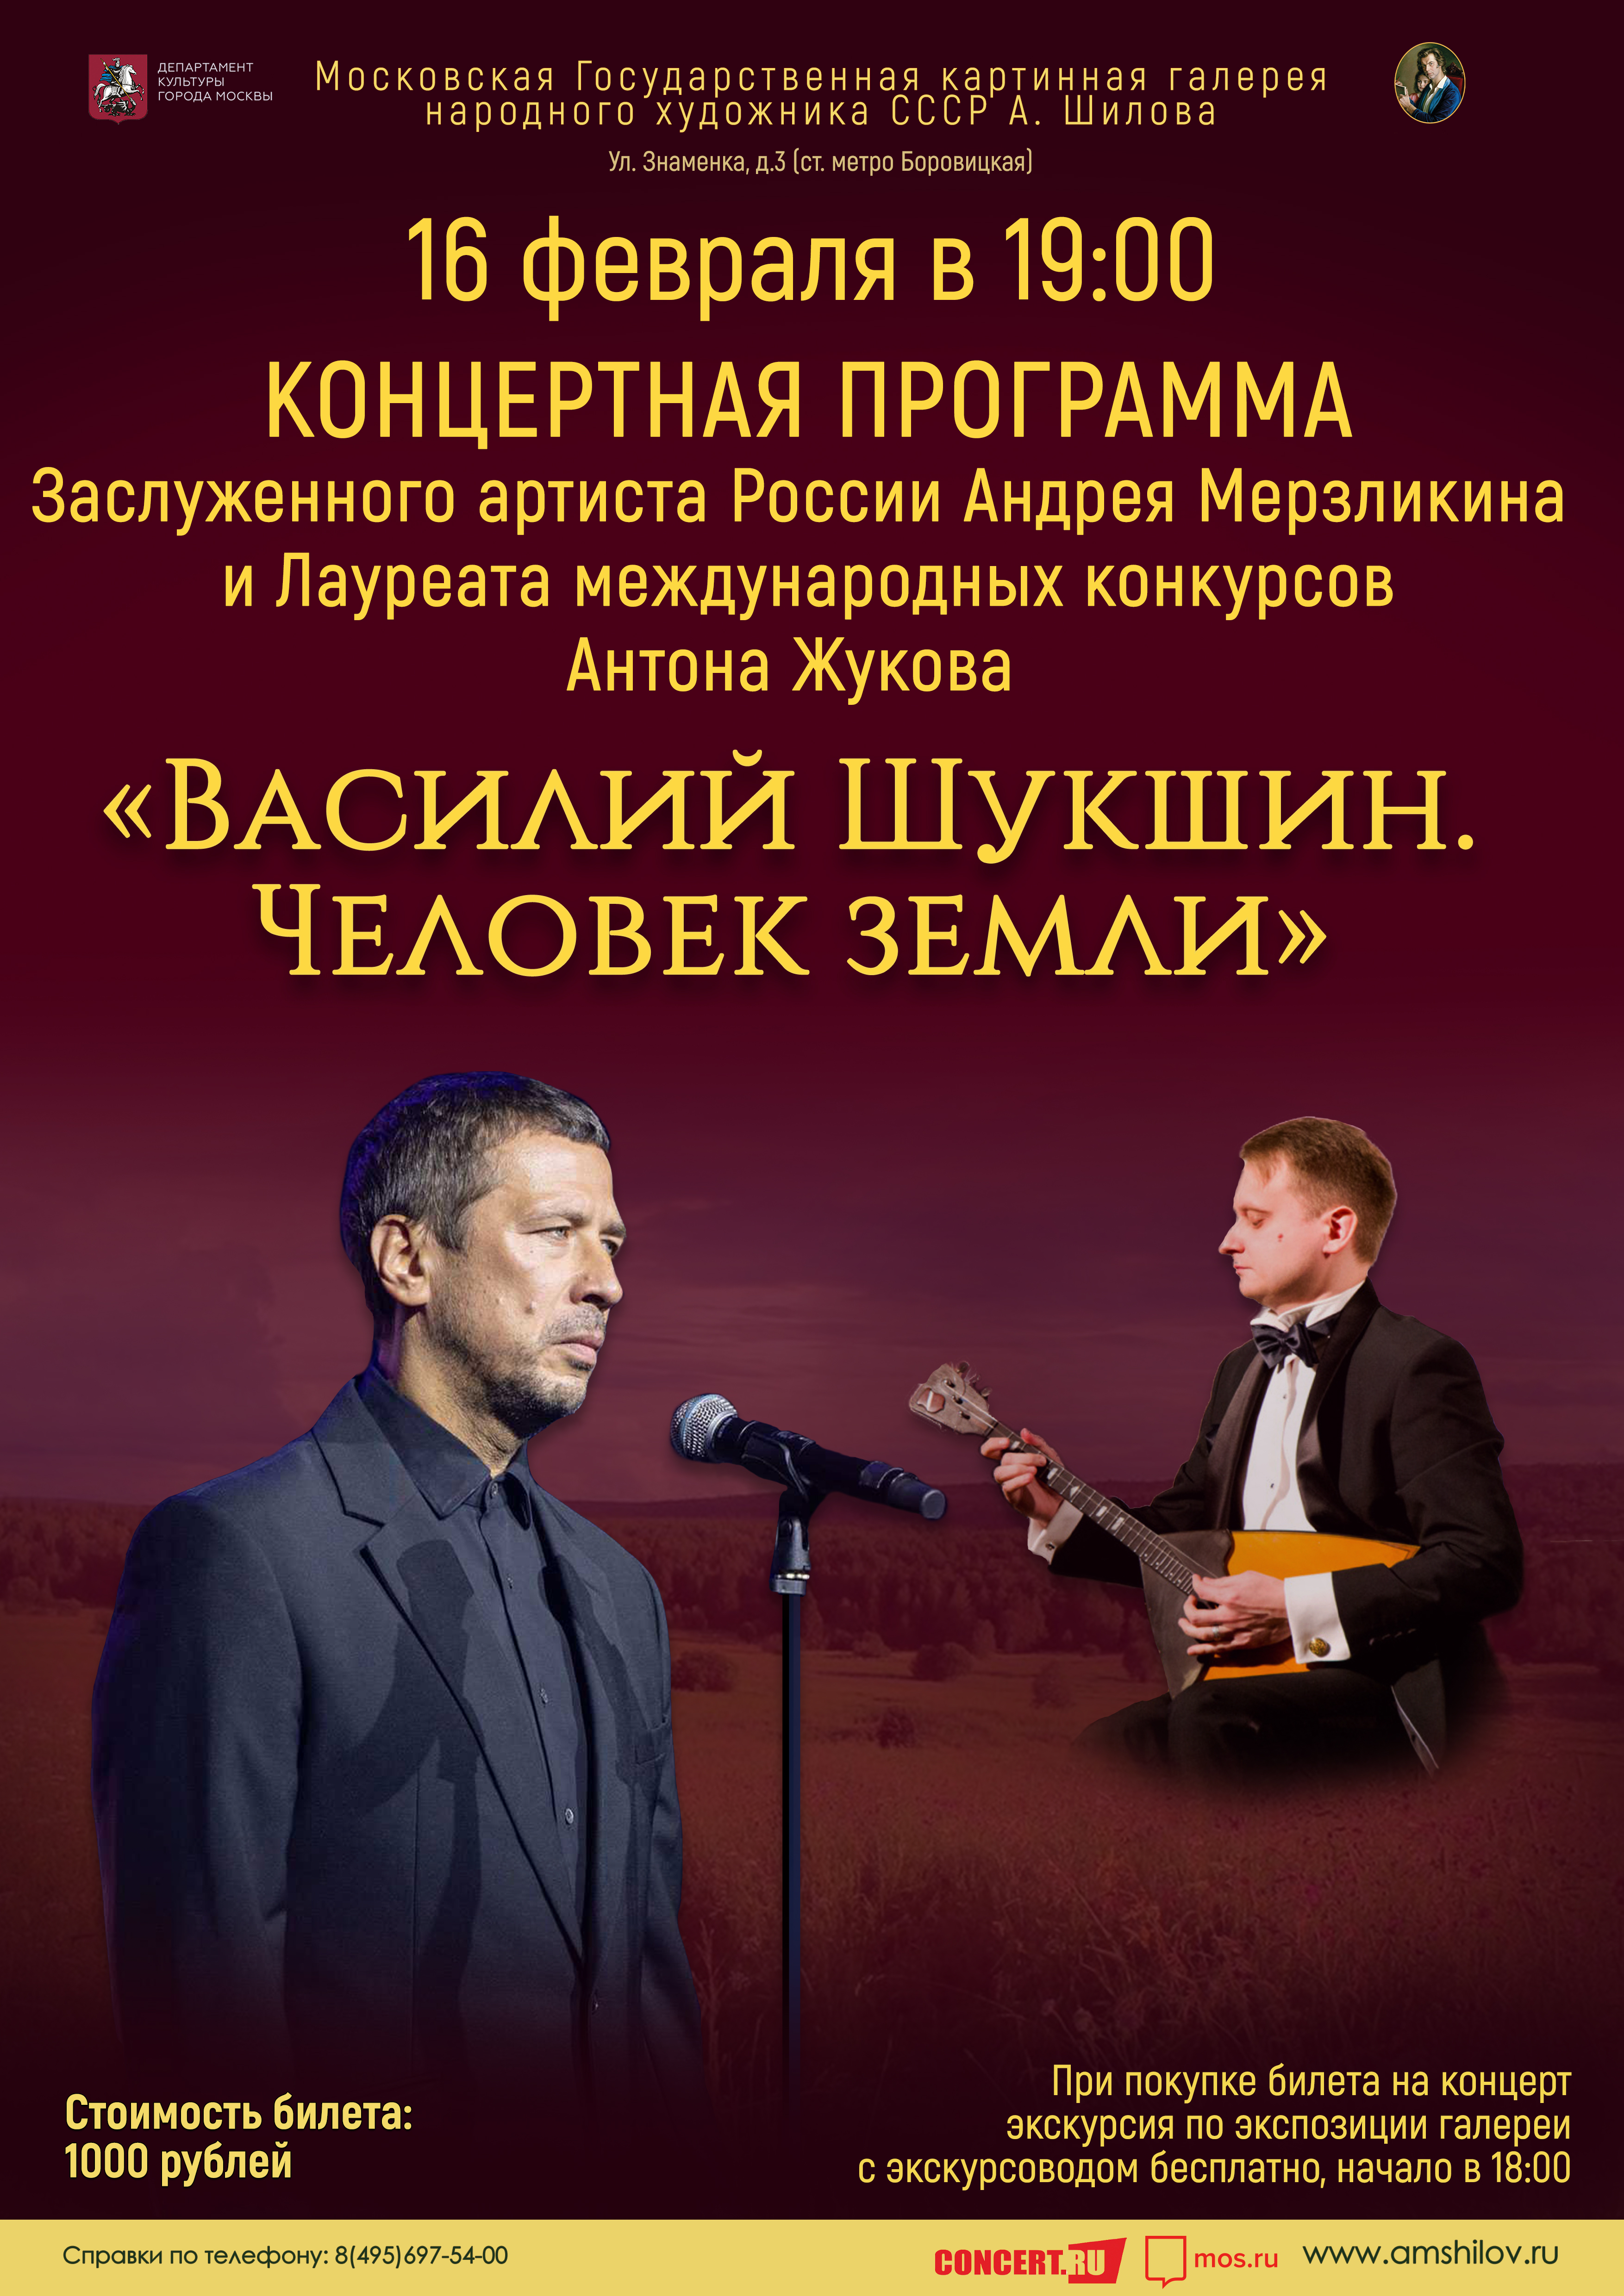 Концертная программа «Василий Шукшин. Человек земли»